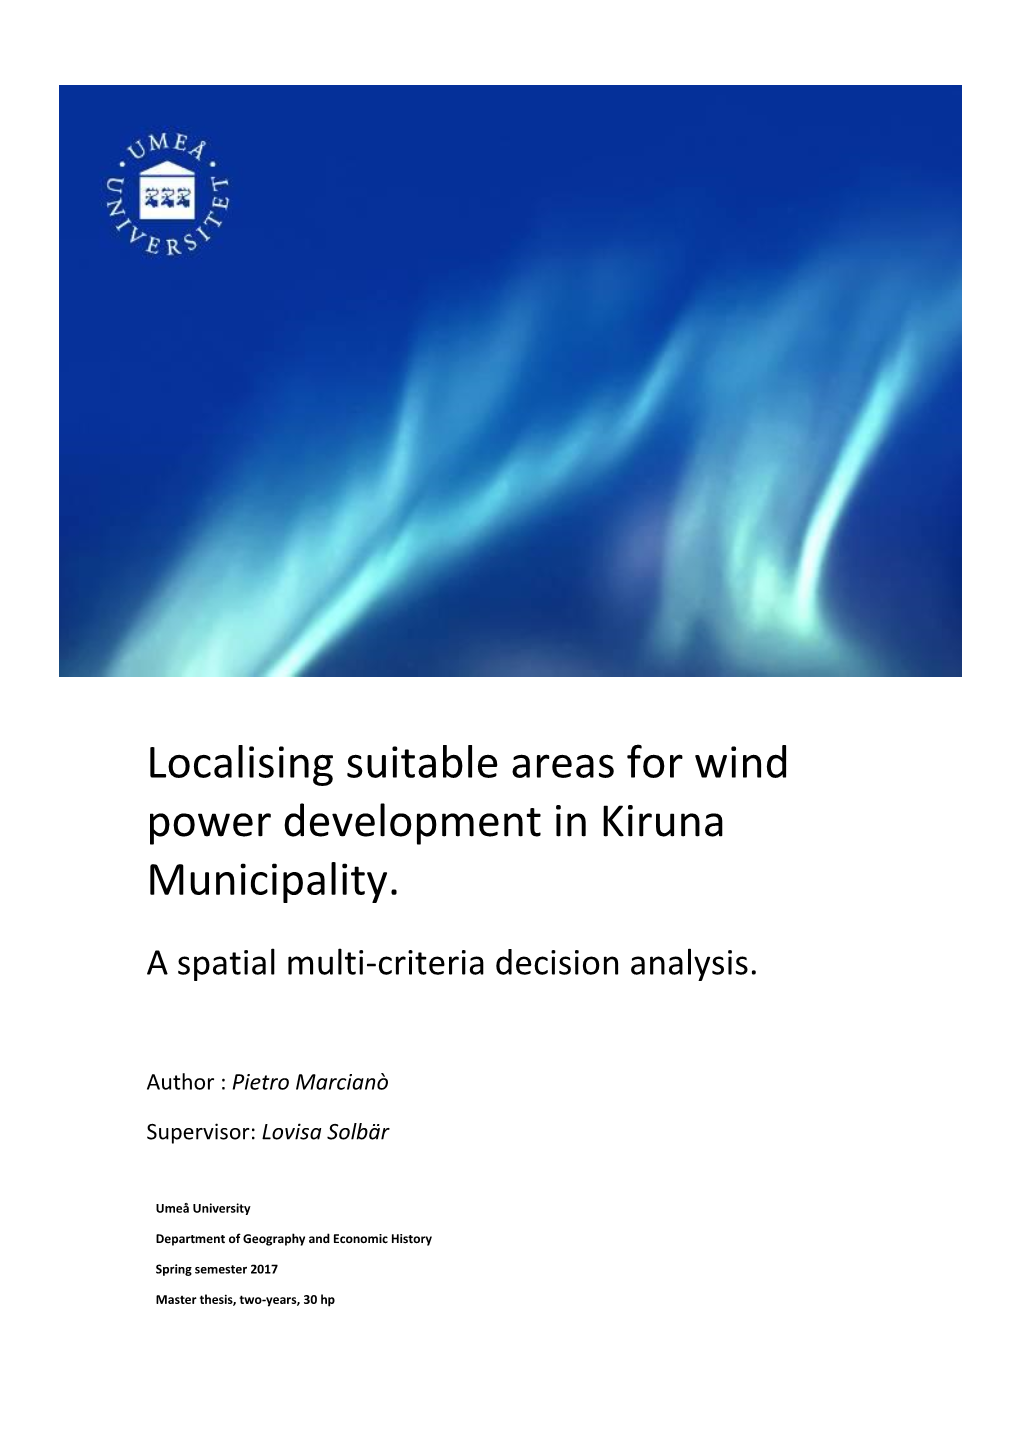 Localising Suitable Areas for Wind Power Development in Kiruna Municipality